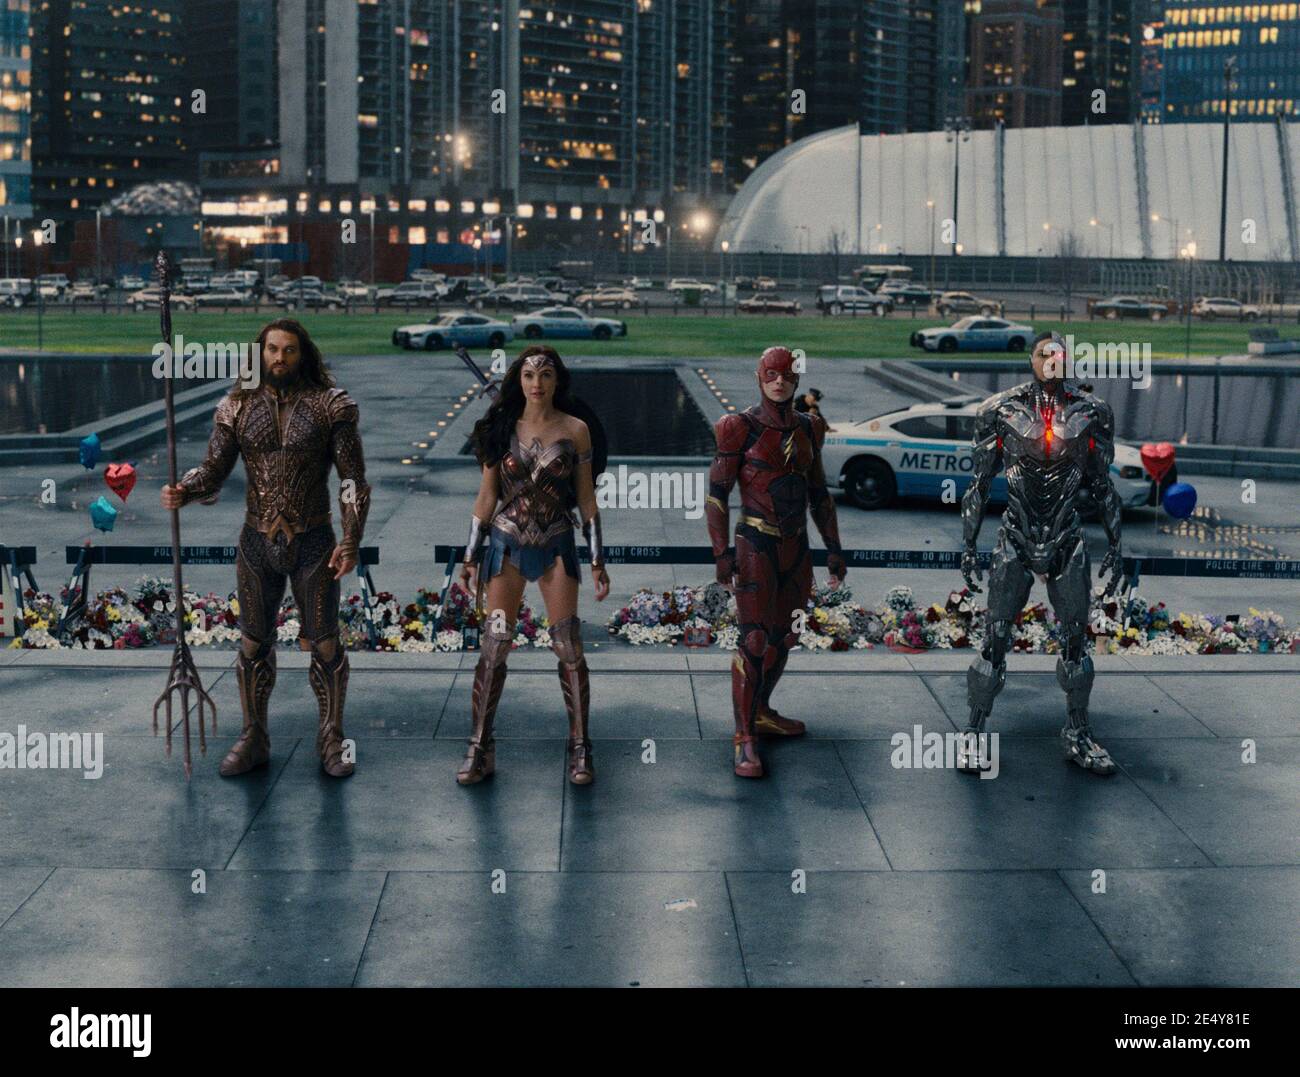 Justice League: Justice League (film, 2017): Jason Momoa (Aquaman), Gal Gadot (Wonder Woman), Ezra Miller (The Flash), Ray Fisher (Cyborg) Stock Photo